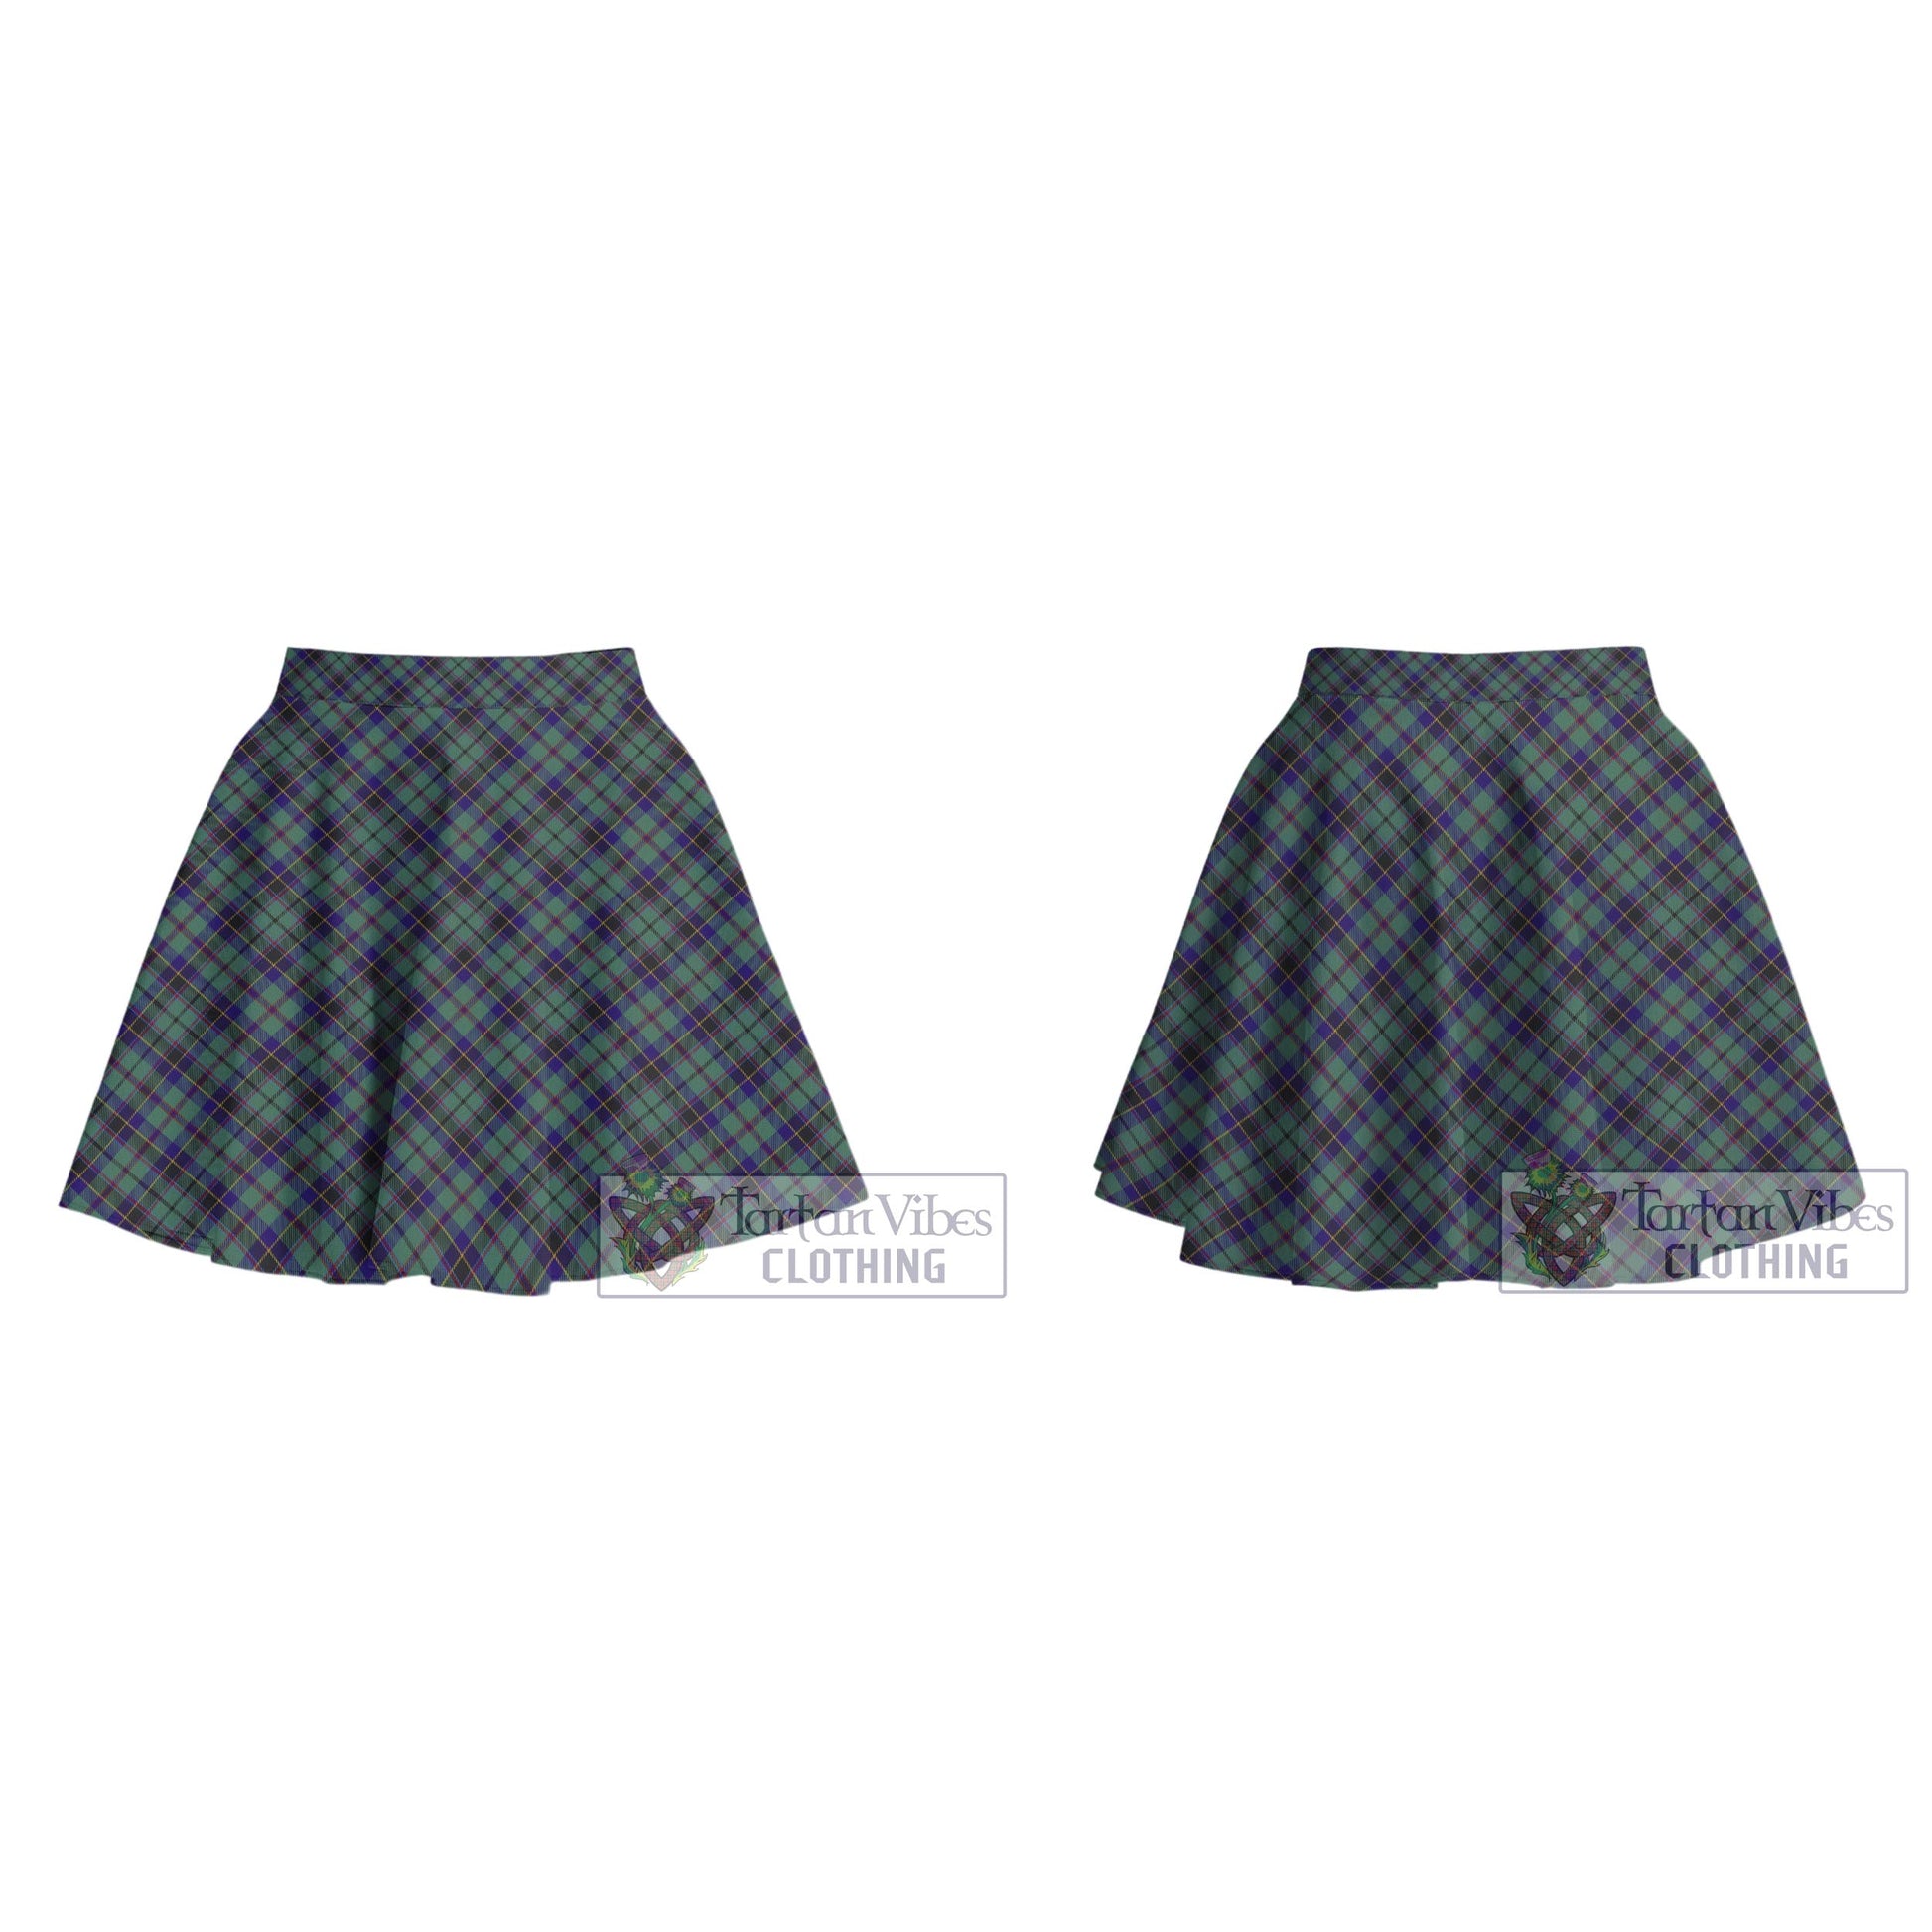 Tartan Vibes Clothing Stephenson Tartan Women's Plated Mini Skirt